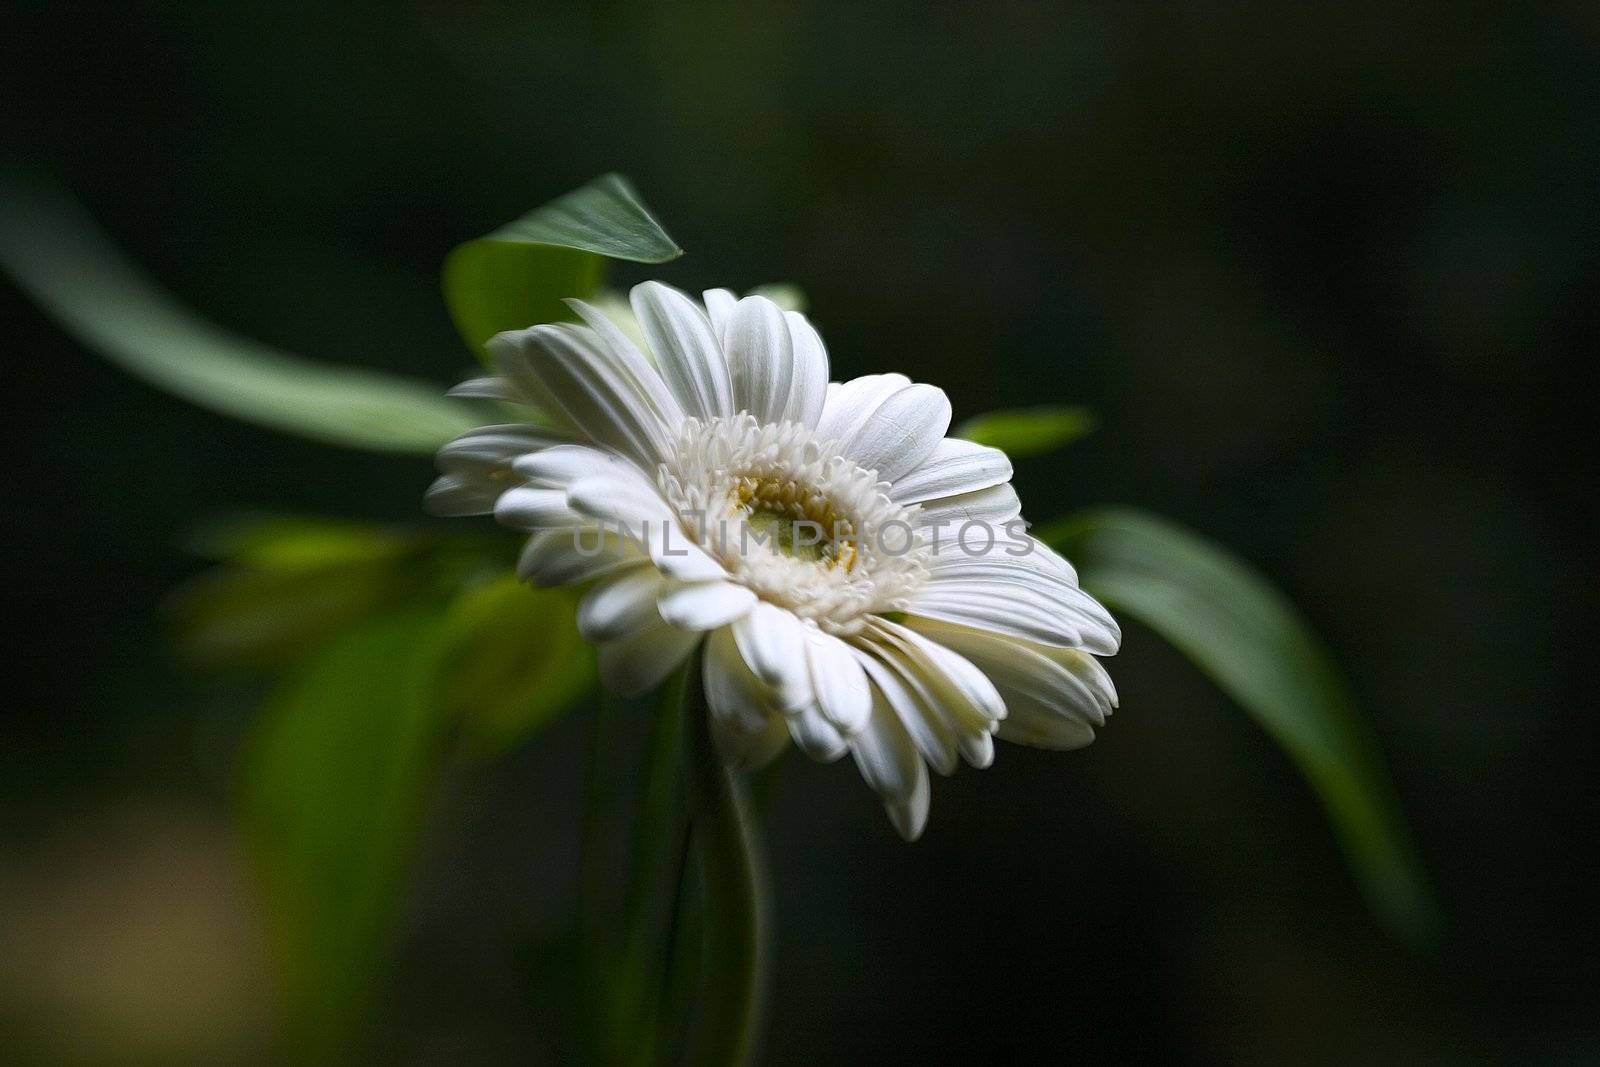 White flower by miradrozdowski